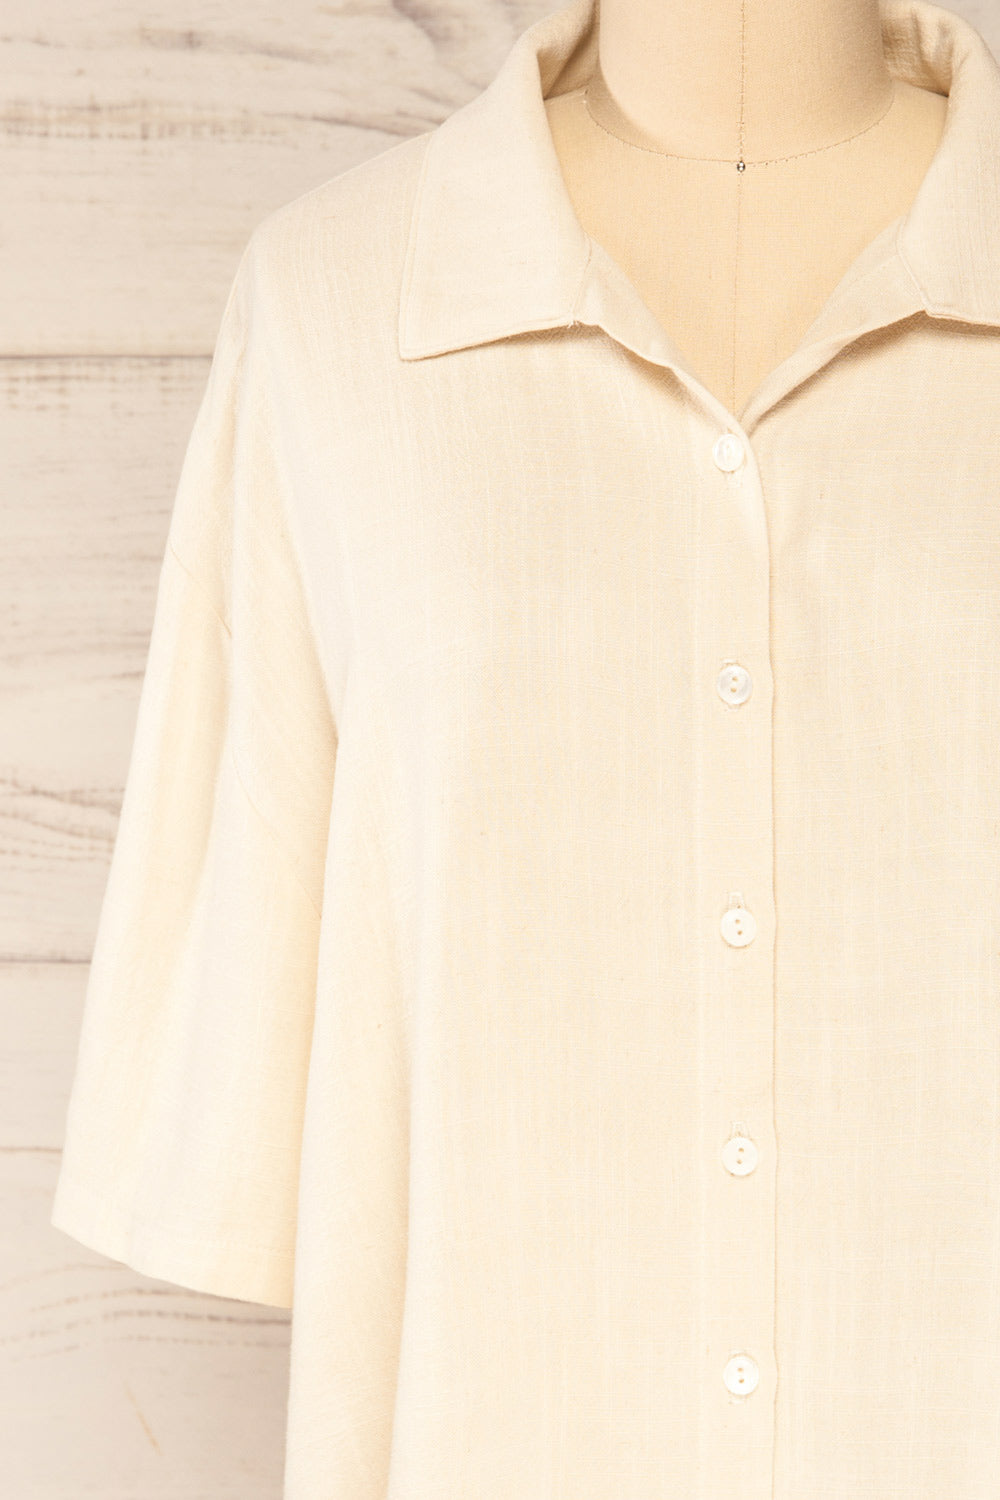 Thelma Beige Short Sleeves Button Up Shirt | La petite garçonne front close-up